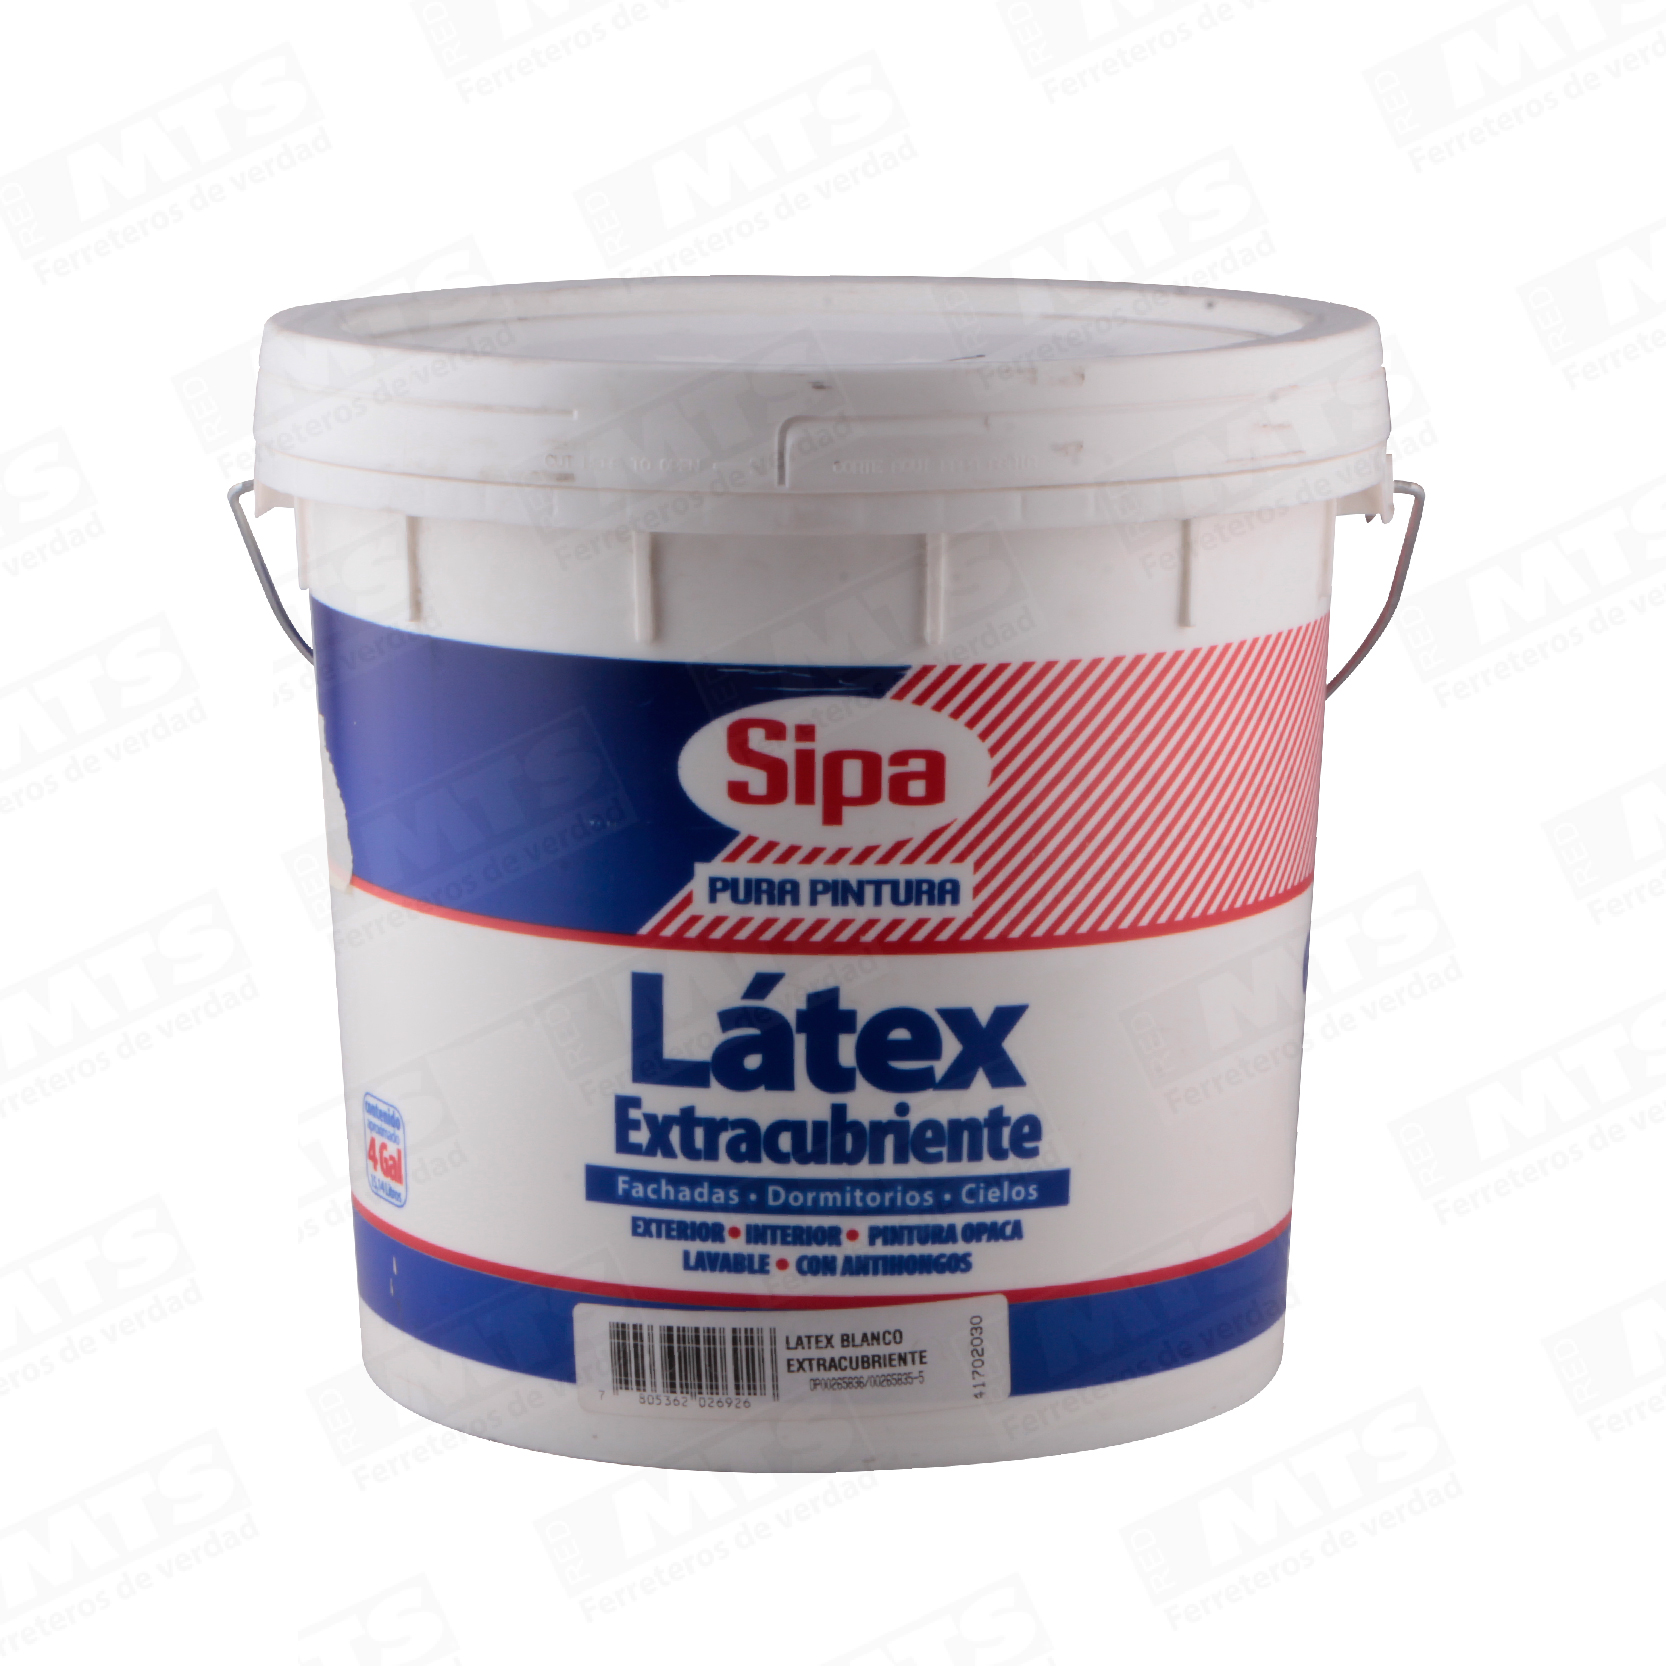 Latex Sipa Extra Cubriente Blanco 4 Gl.